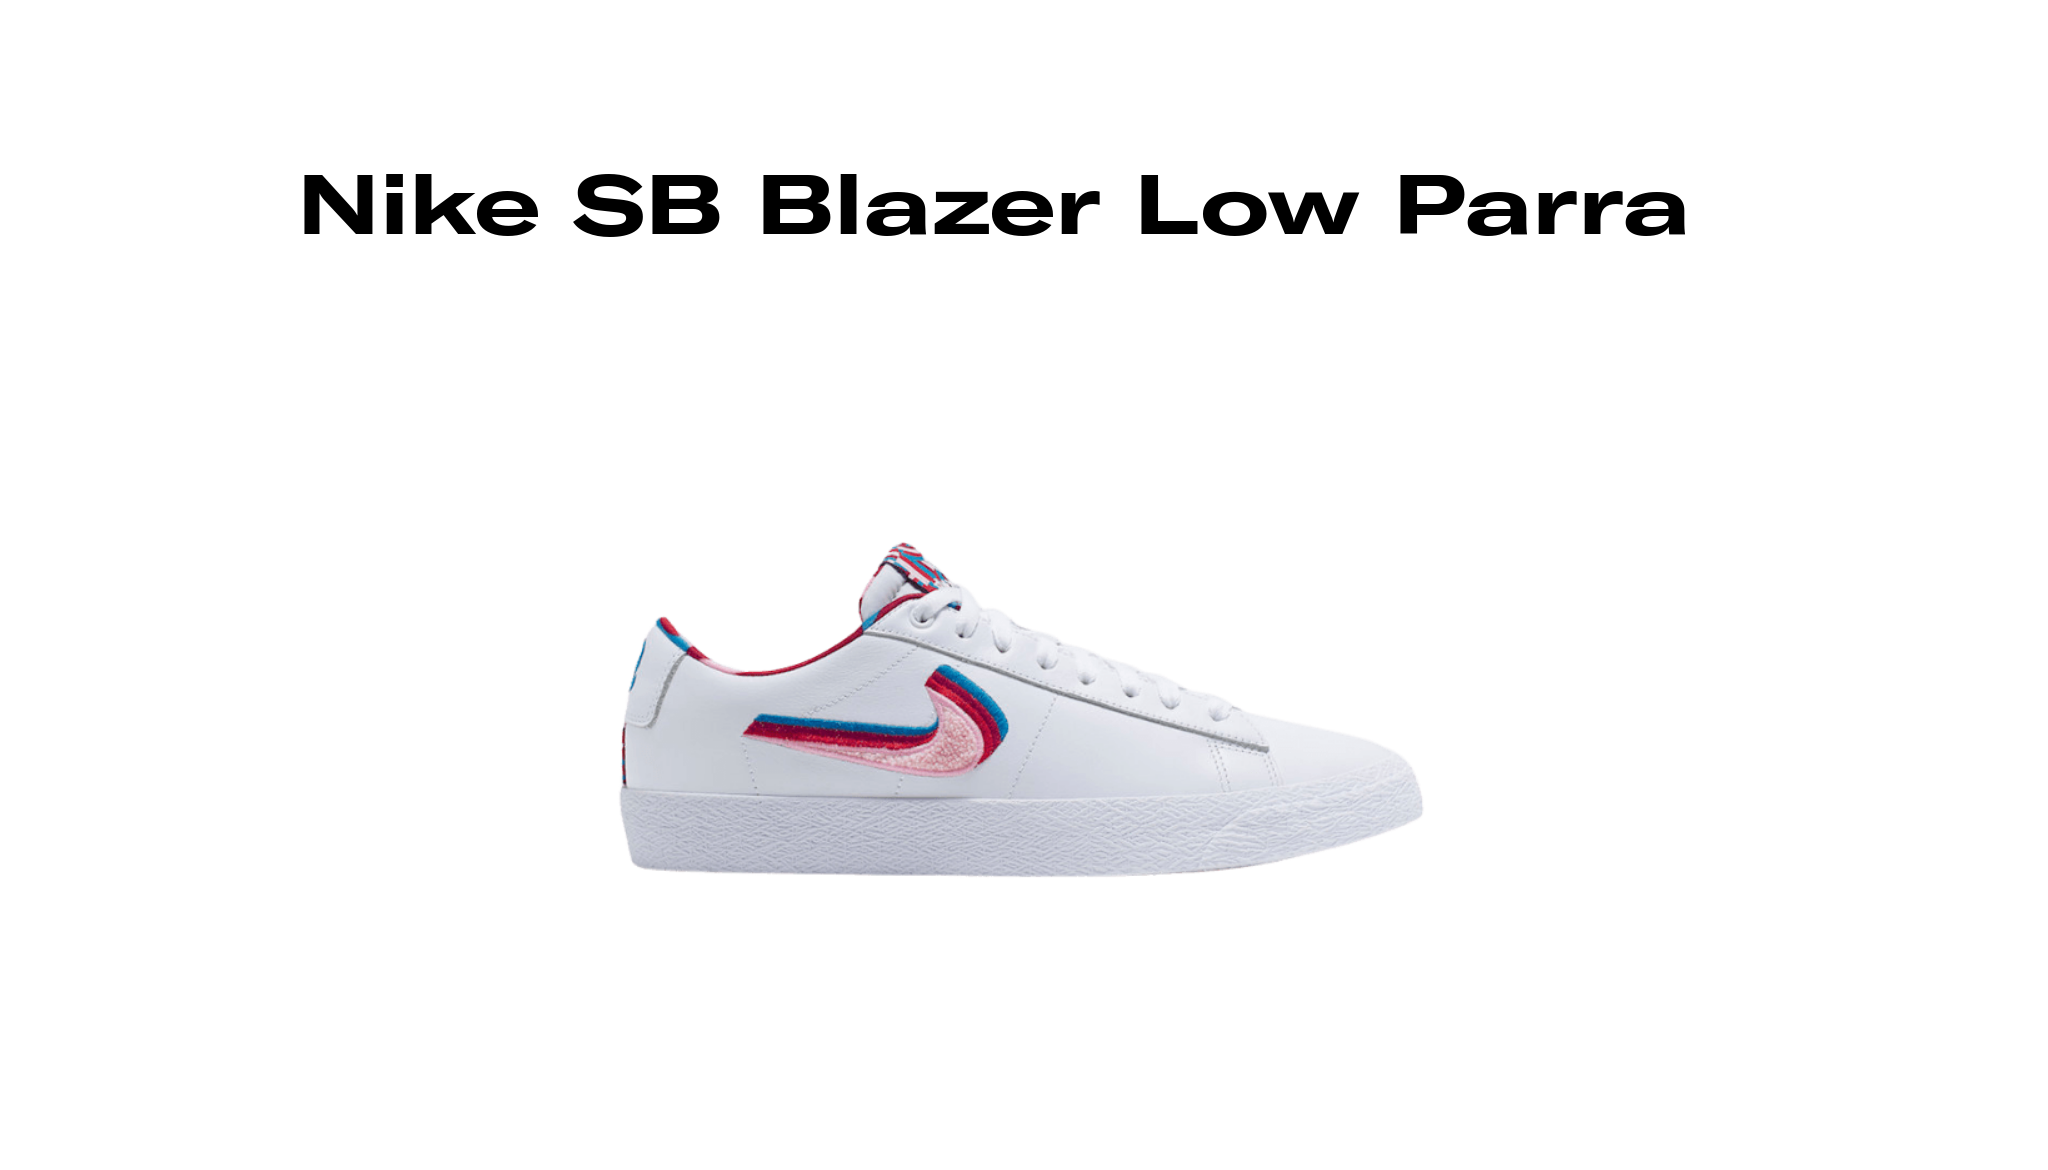 Nike SB Blazer Low Parra Raffles and Dates